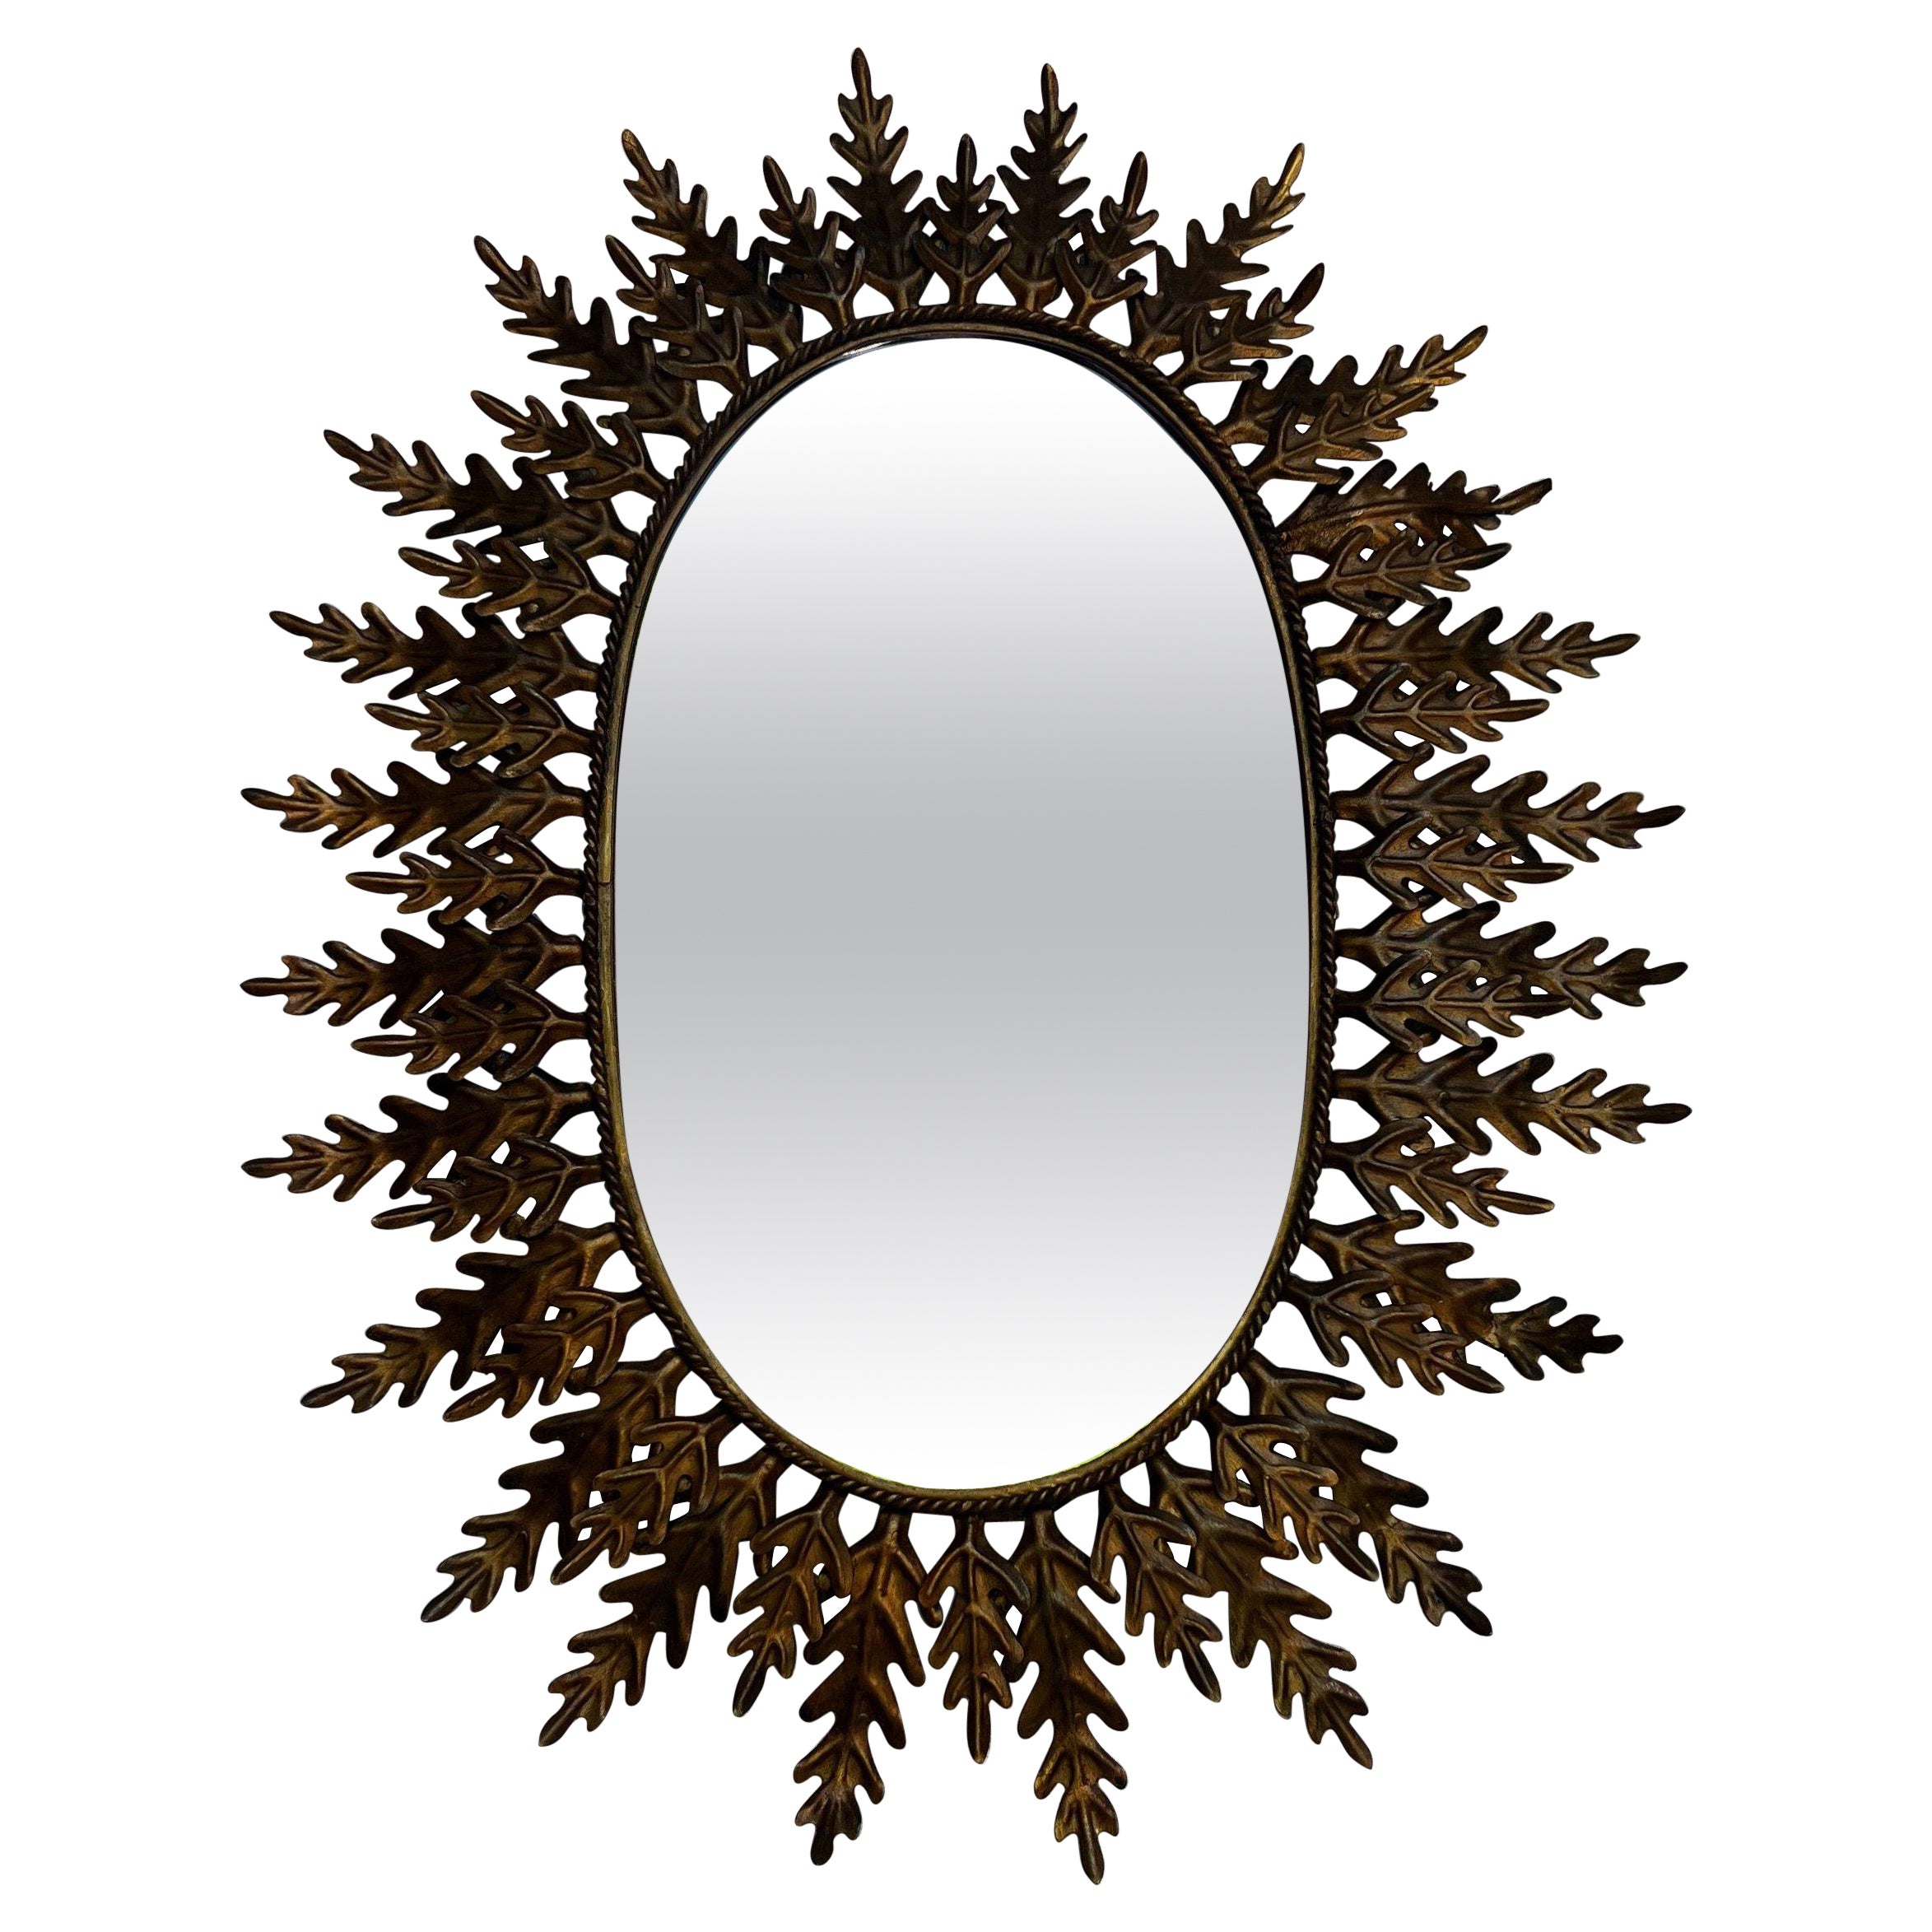 Oval Sunburst Mirror with Alternating Leaves